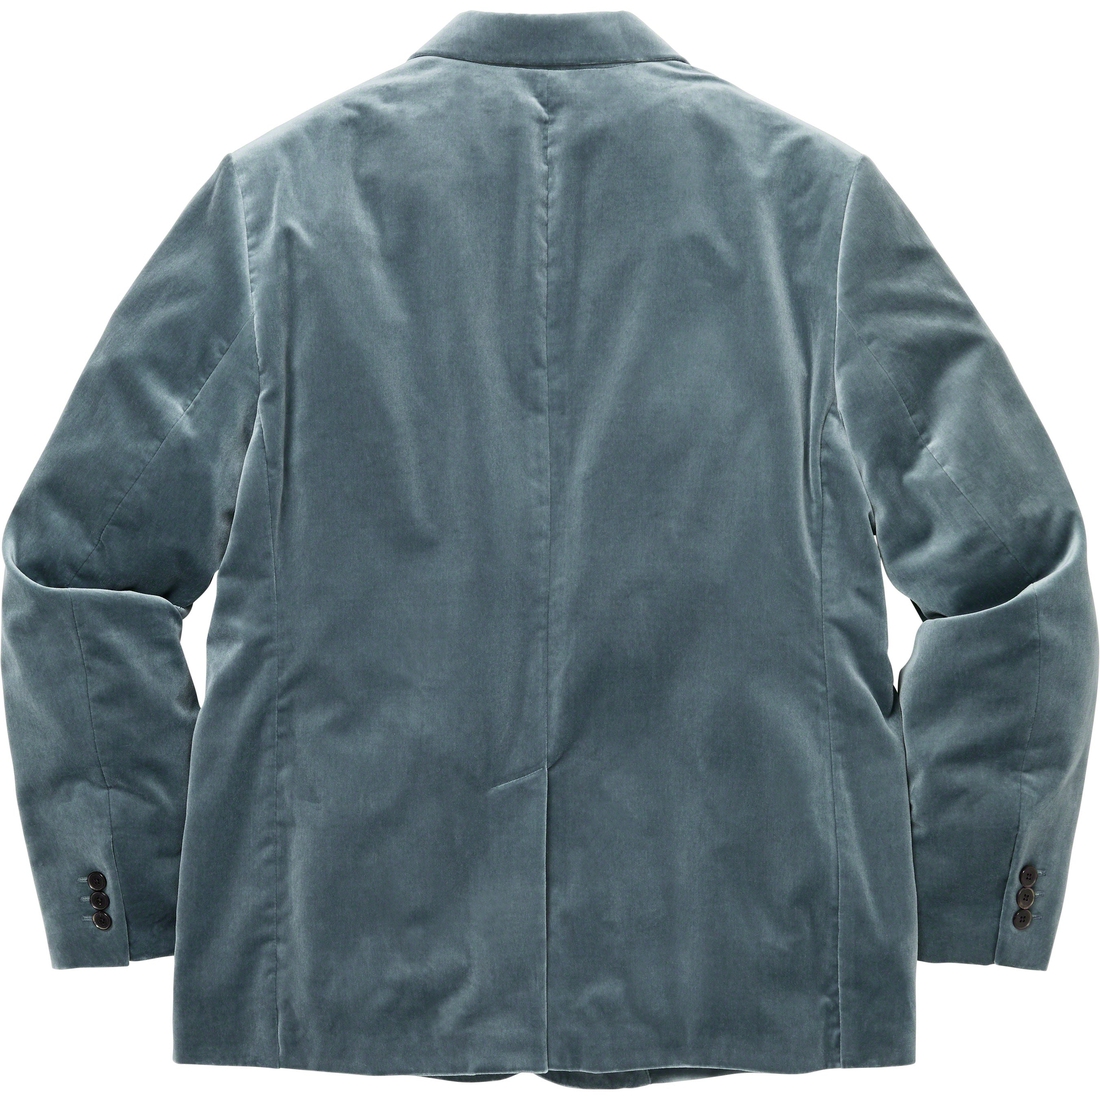 Details on Velvet Suit Slate from fall winter
                                                    2023 (Price is $668)